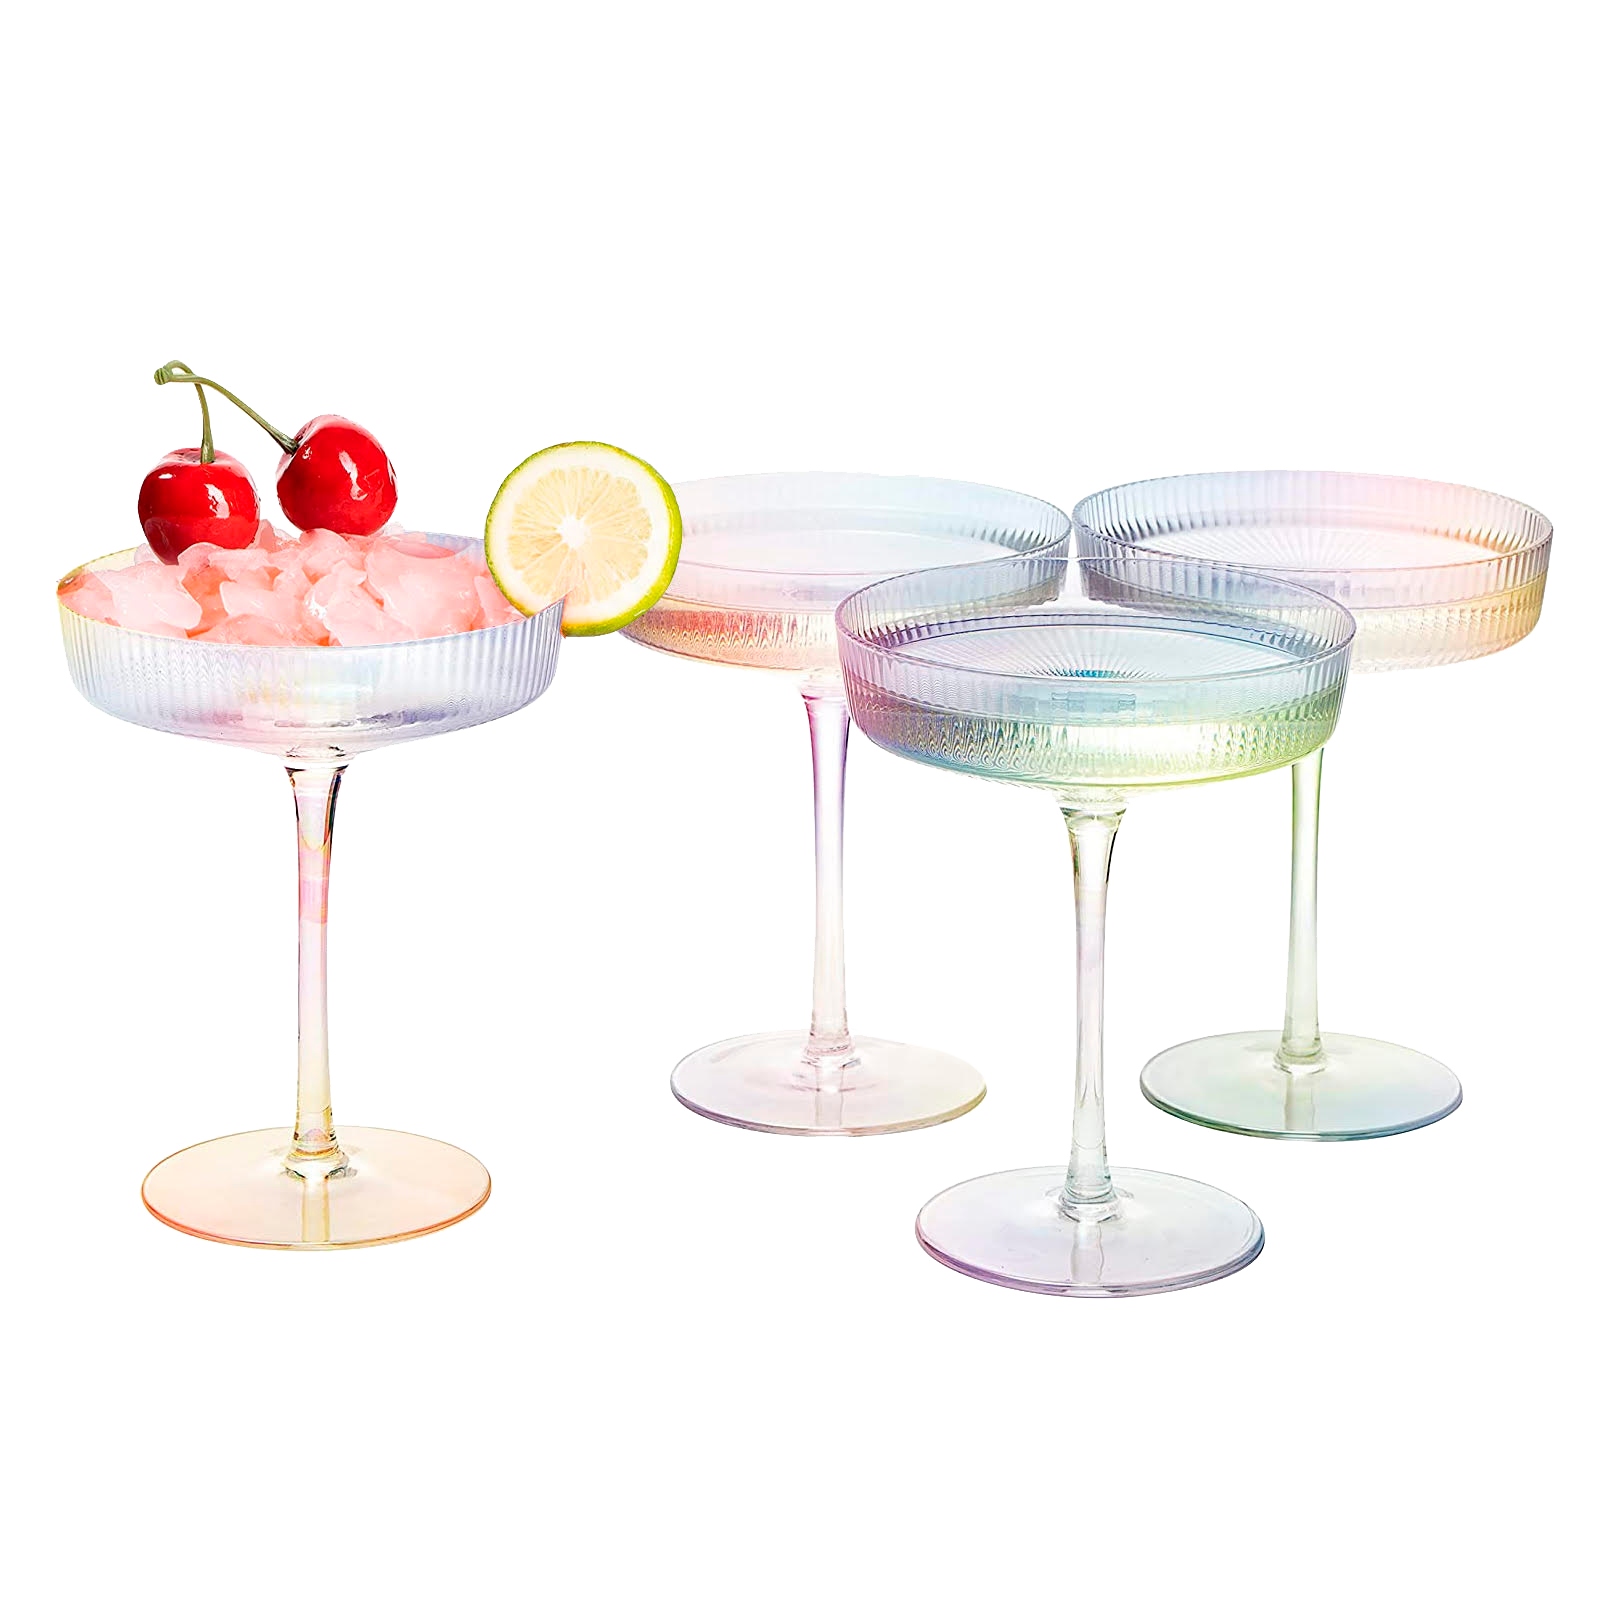 whatAmug Set of 2 Iridescent Cocktail Glasses, Rainbow Ribbed Coupe  Glasses, Margarita Glass Set wit…See more whatAmug Set of 2 Iridescent  Cocktail